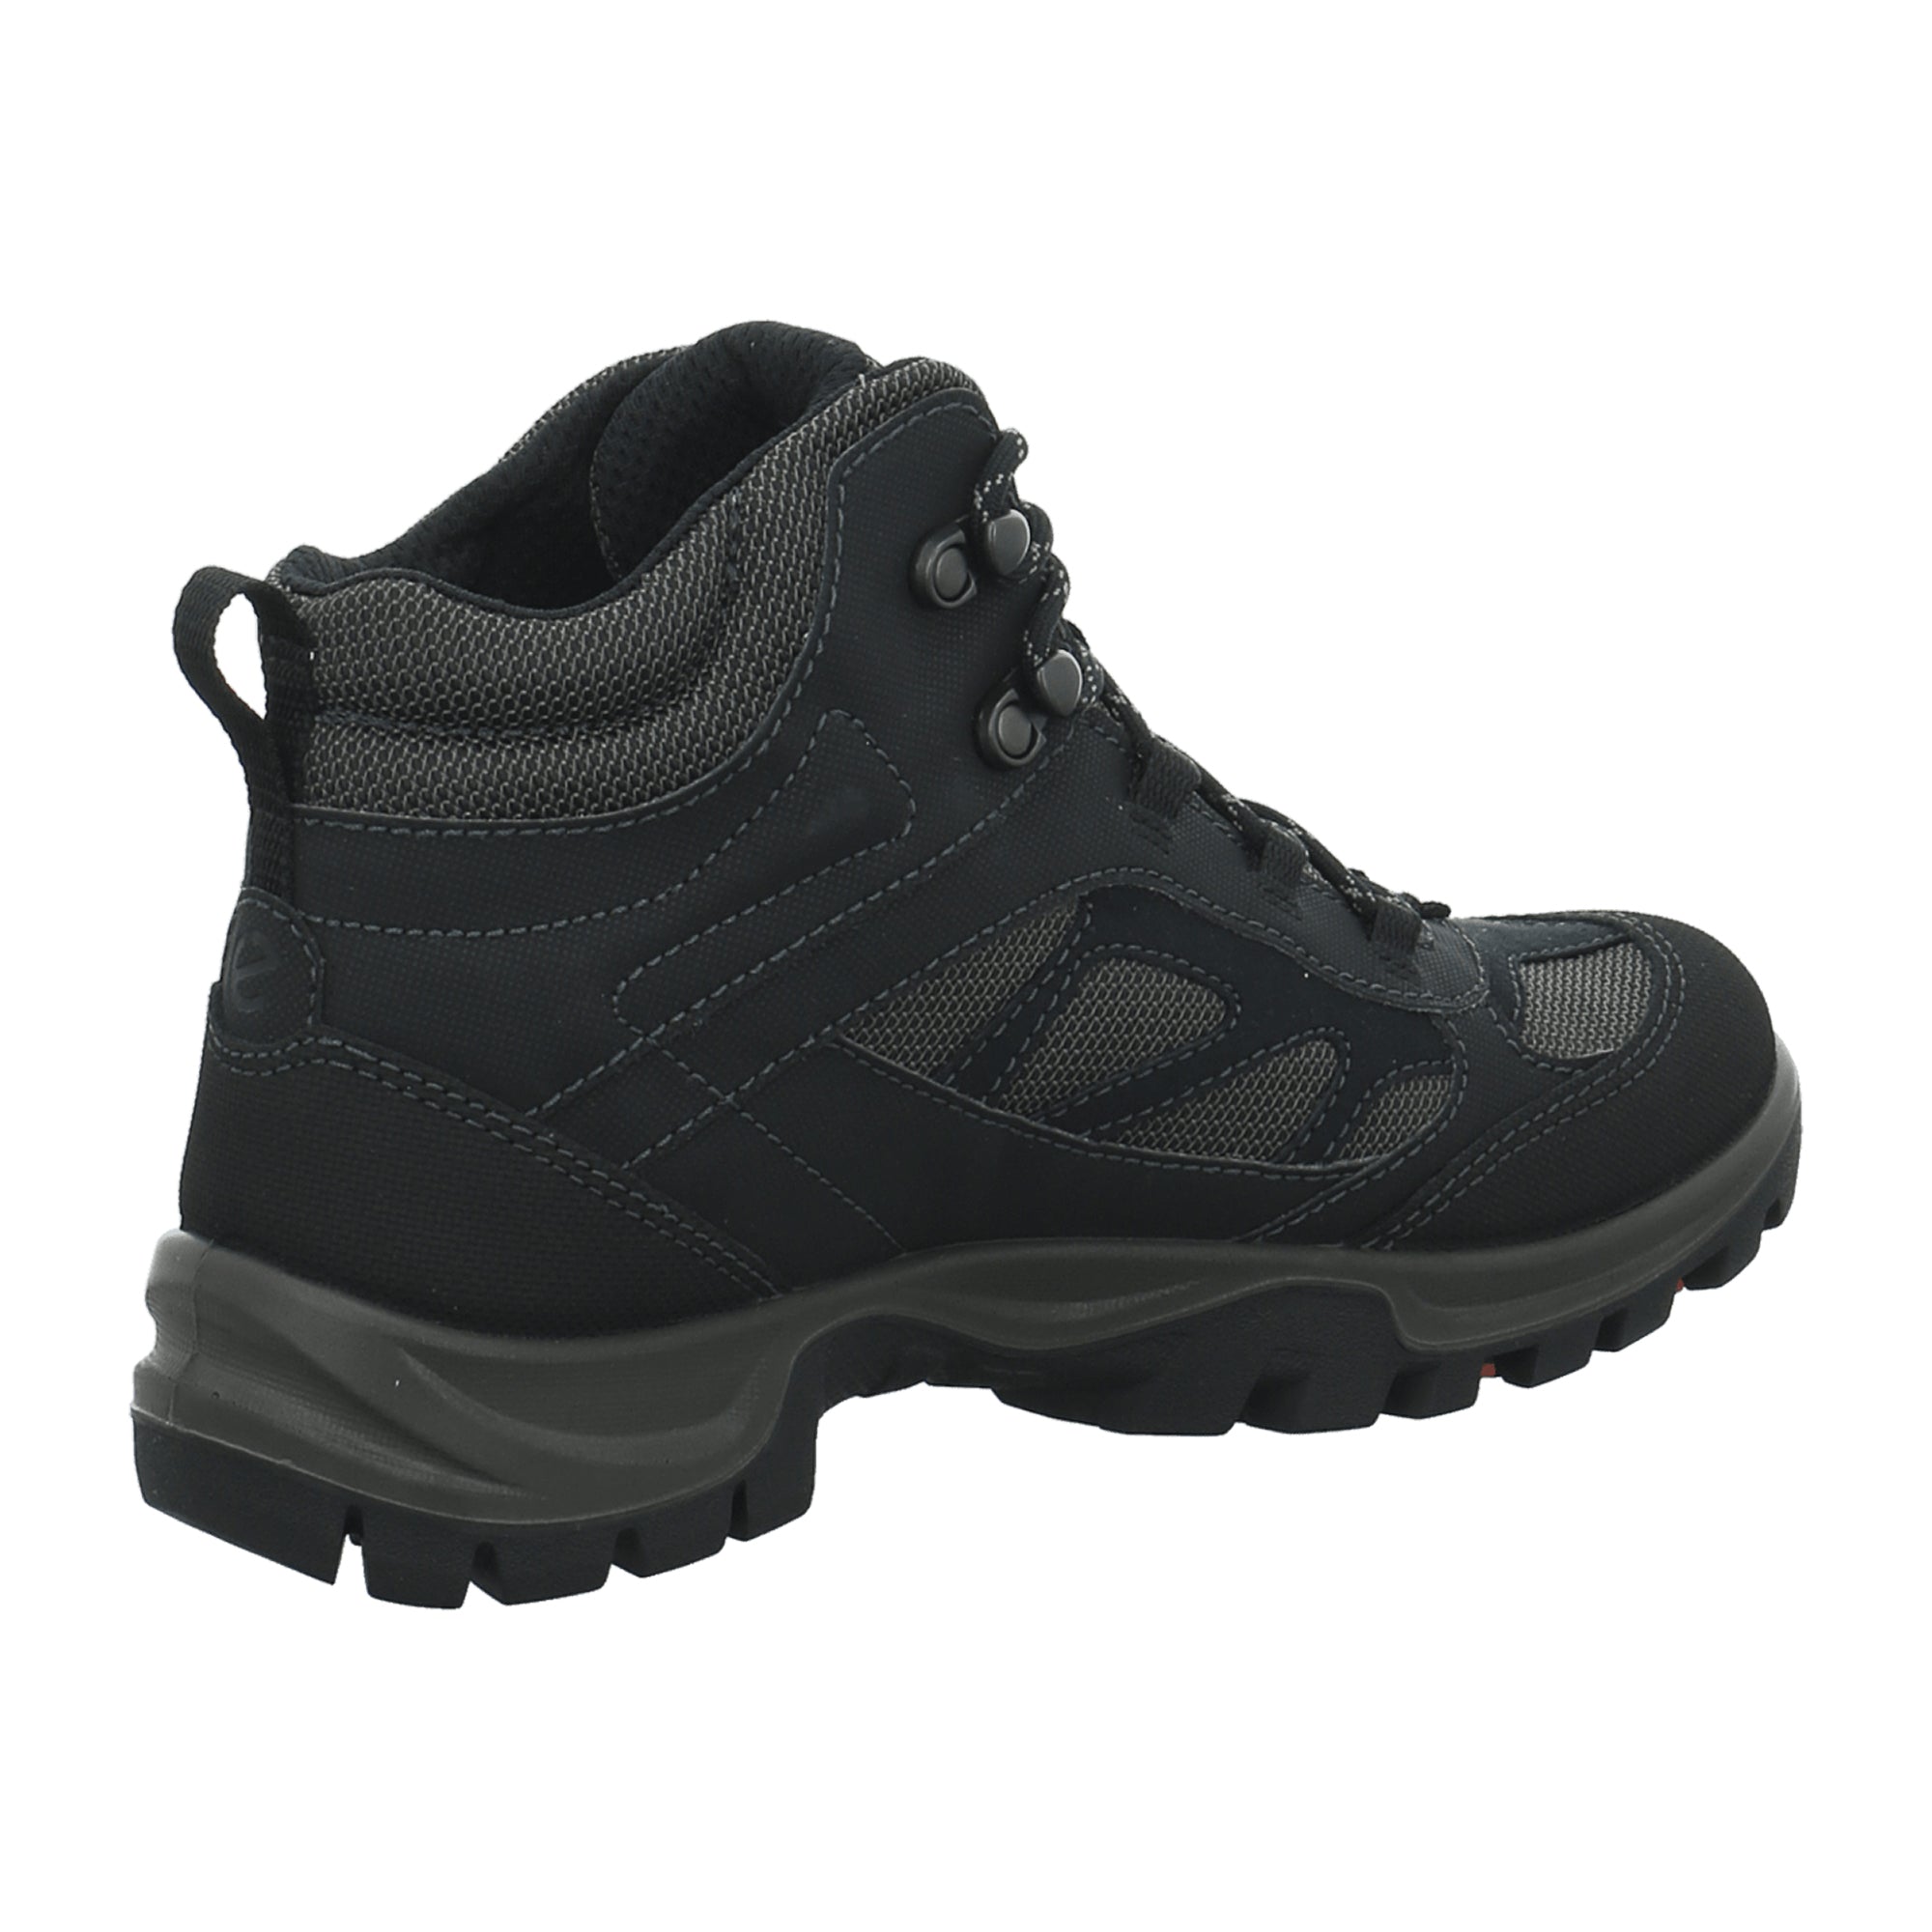 Ecco 811273 Women's Black Comfort Shoes - Stylish & Durable